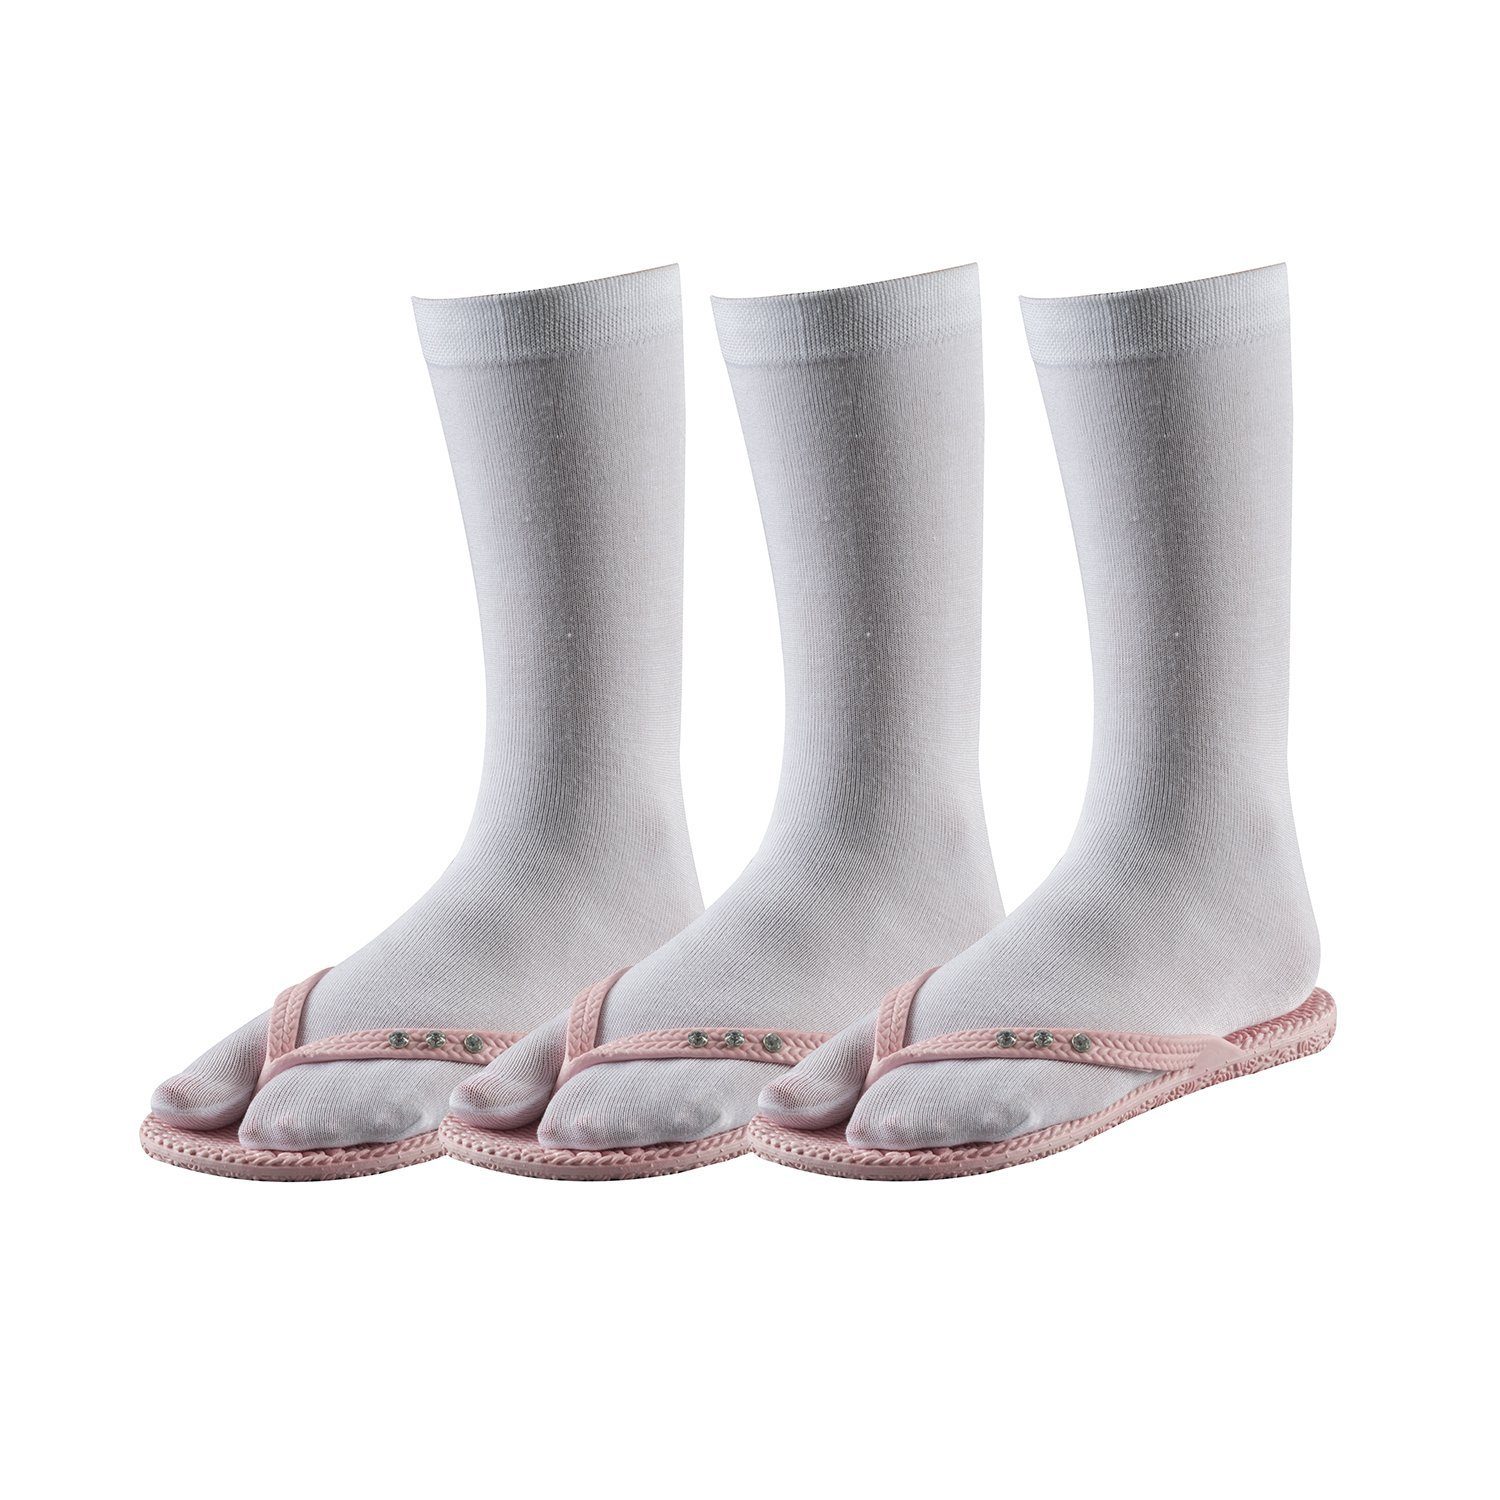 FussFreunde Zehensocken 3 Paar Zwei-Zehen-Socken, Bambussocken, Sandalen-Socken, Tabi Socken